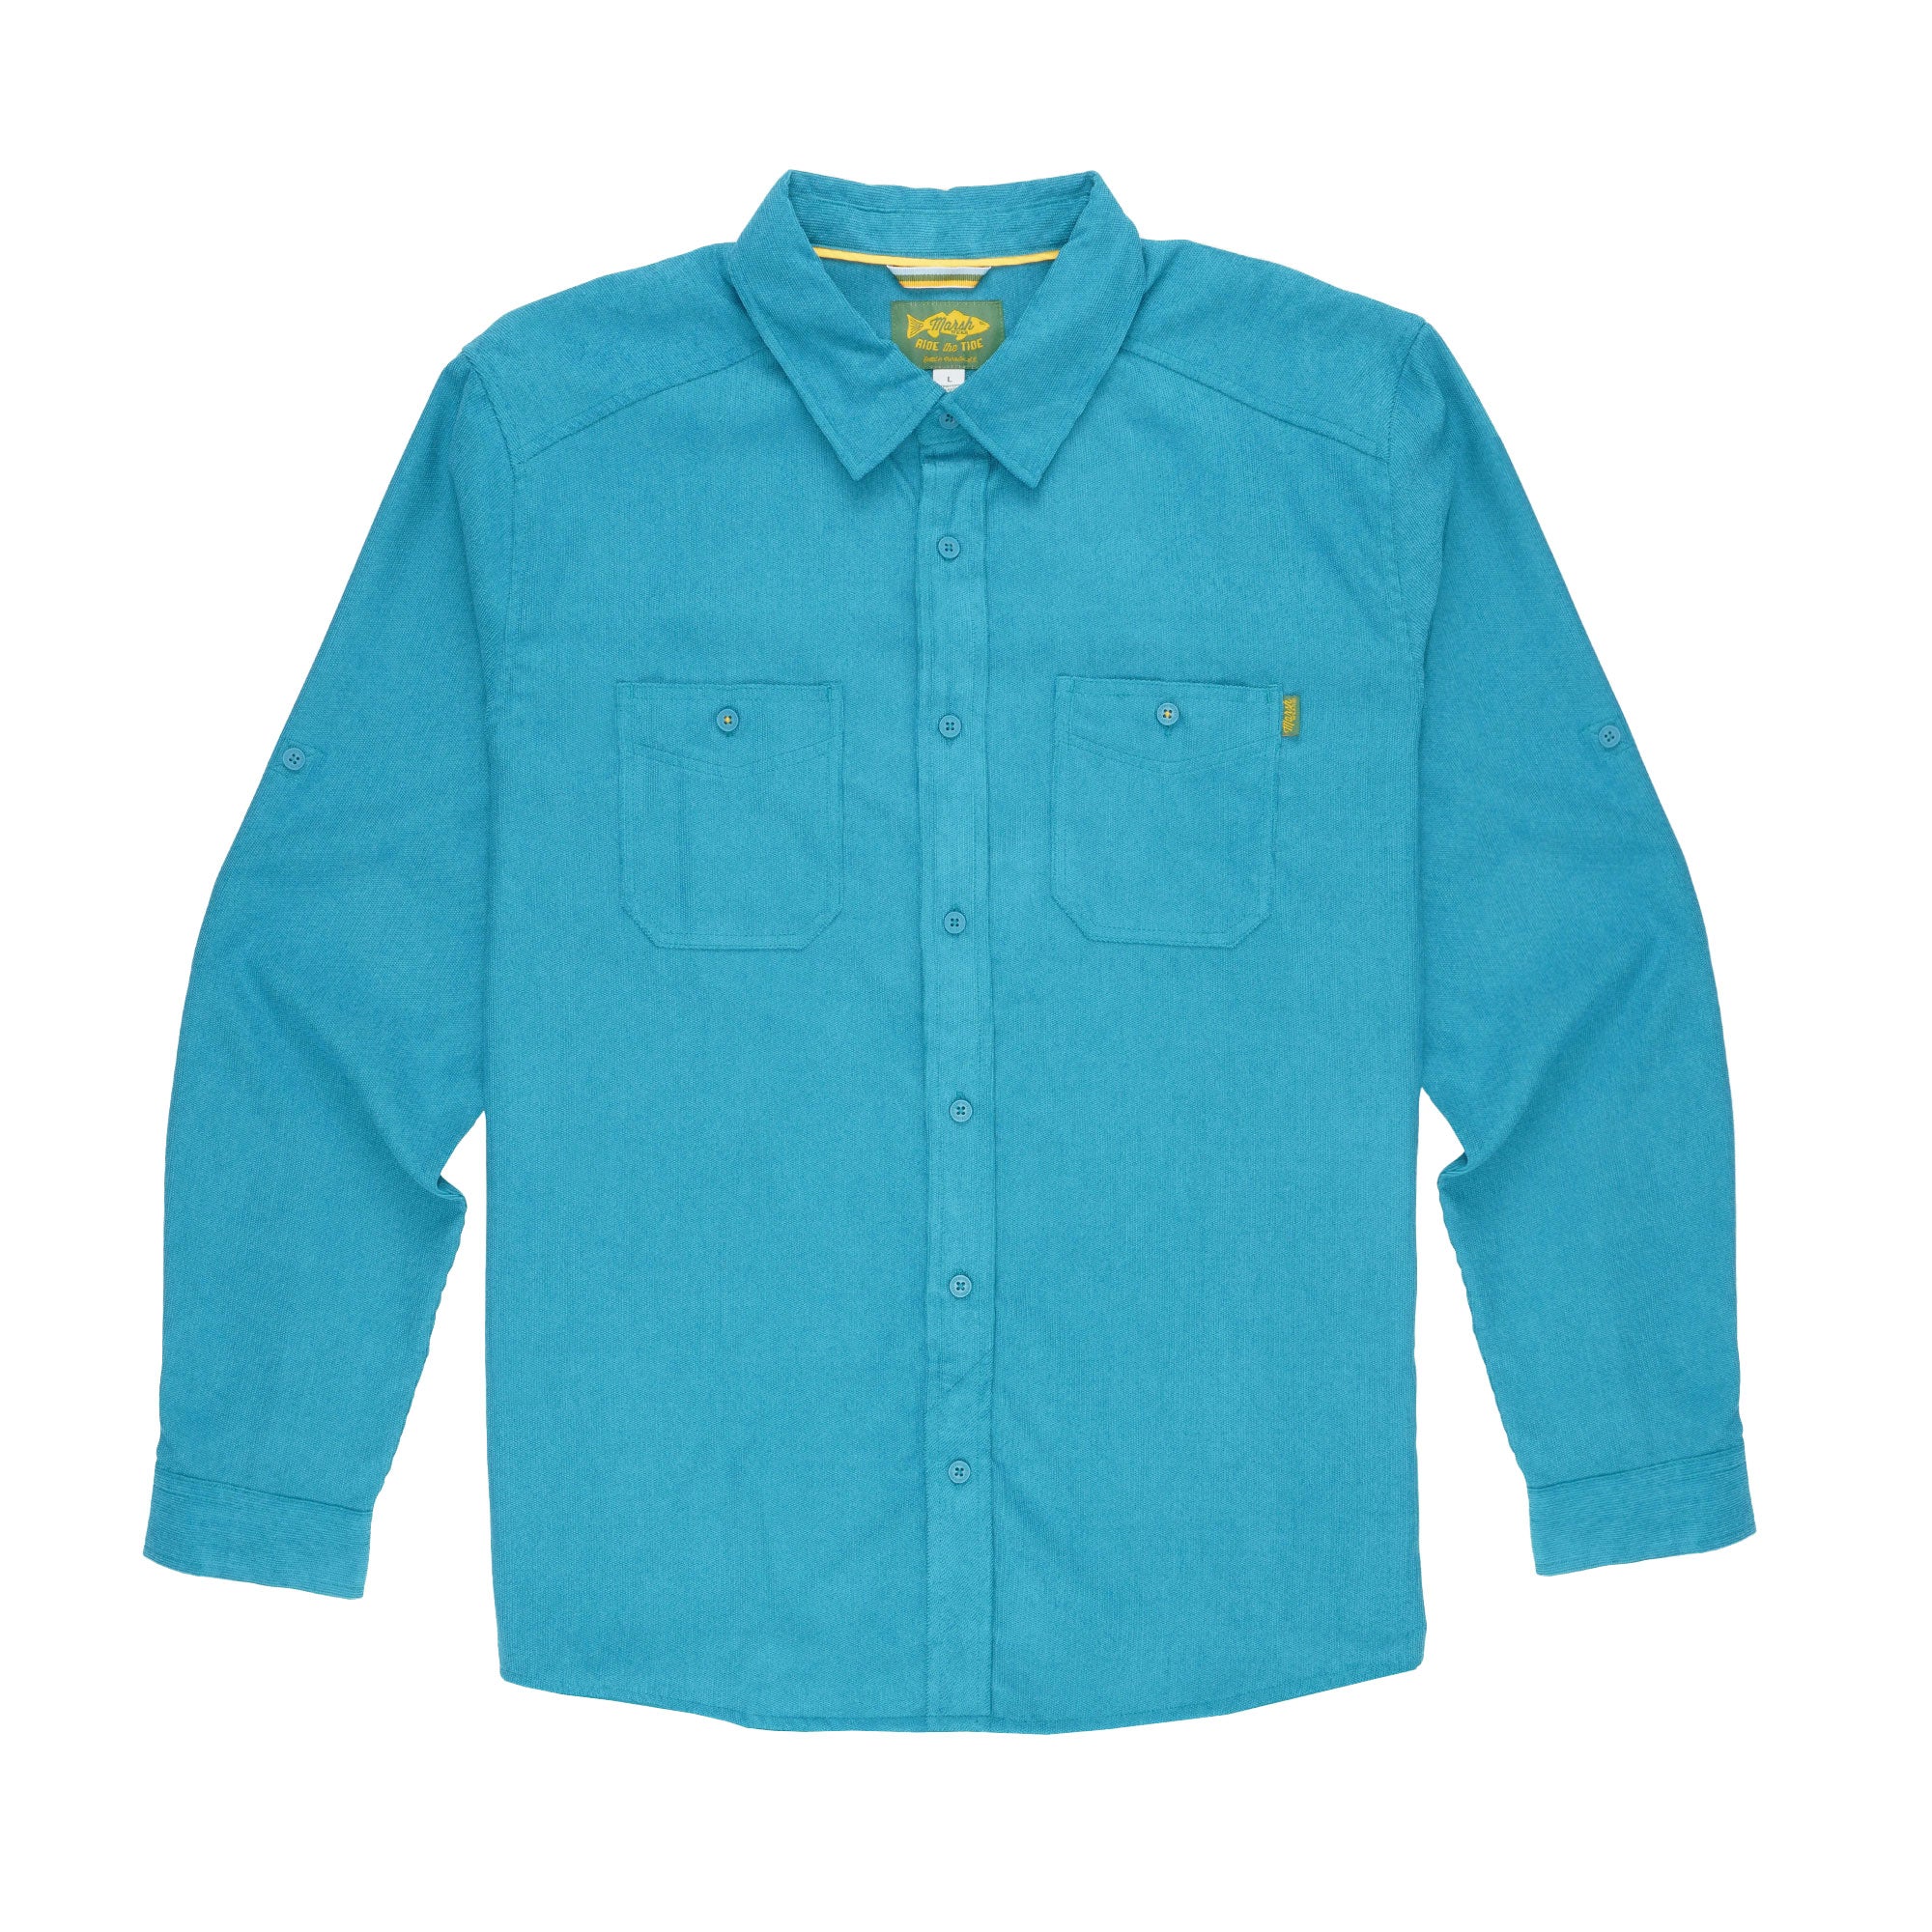 Marsh Wear Cordy Long Sleeve Button up Shirt